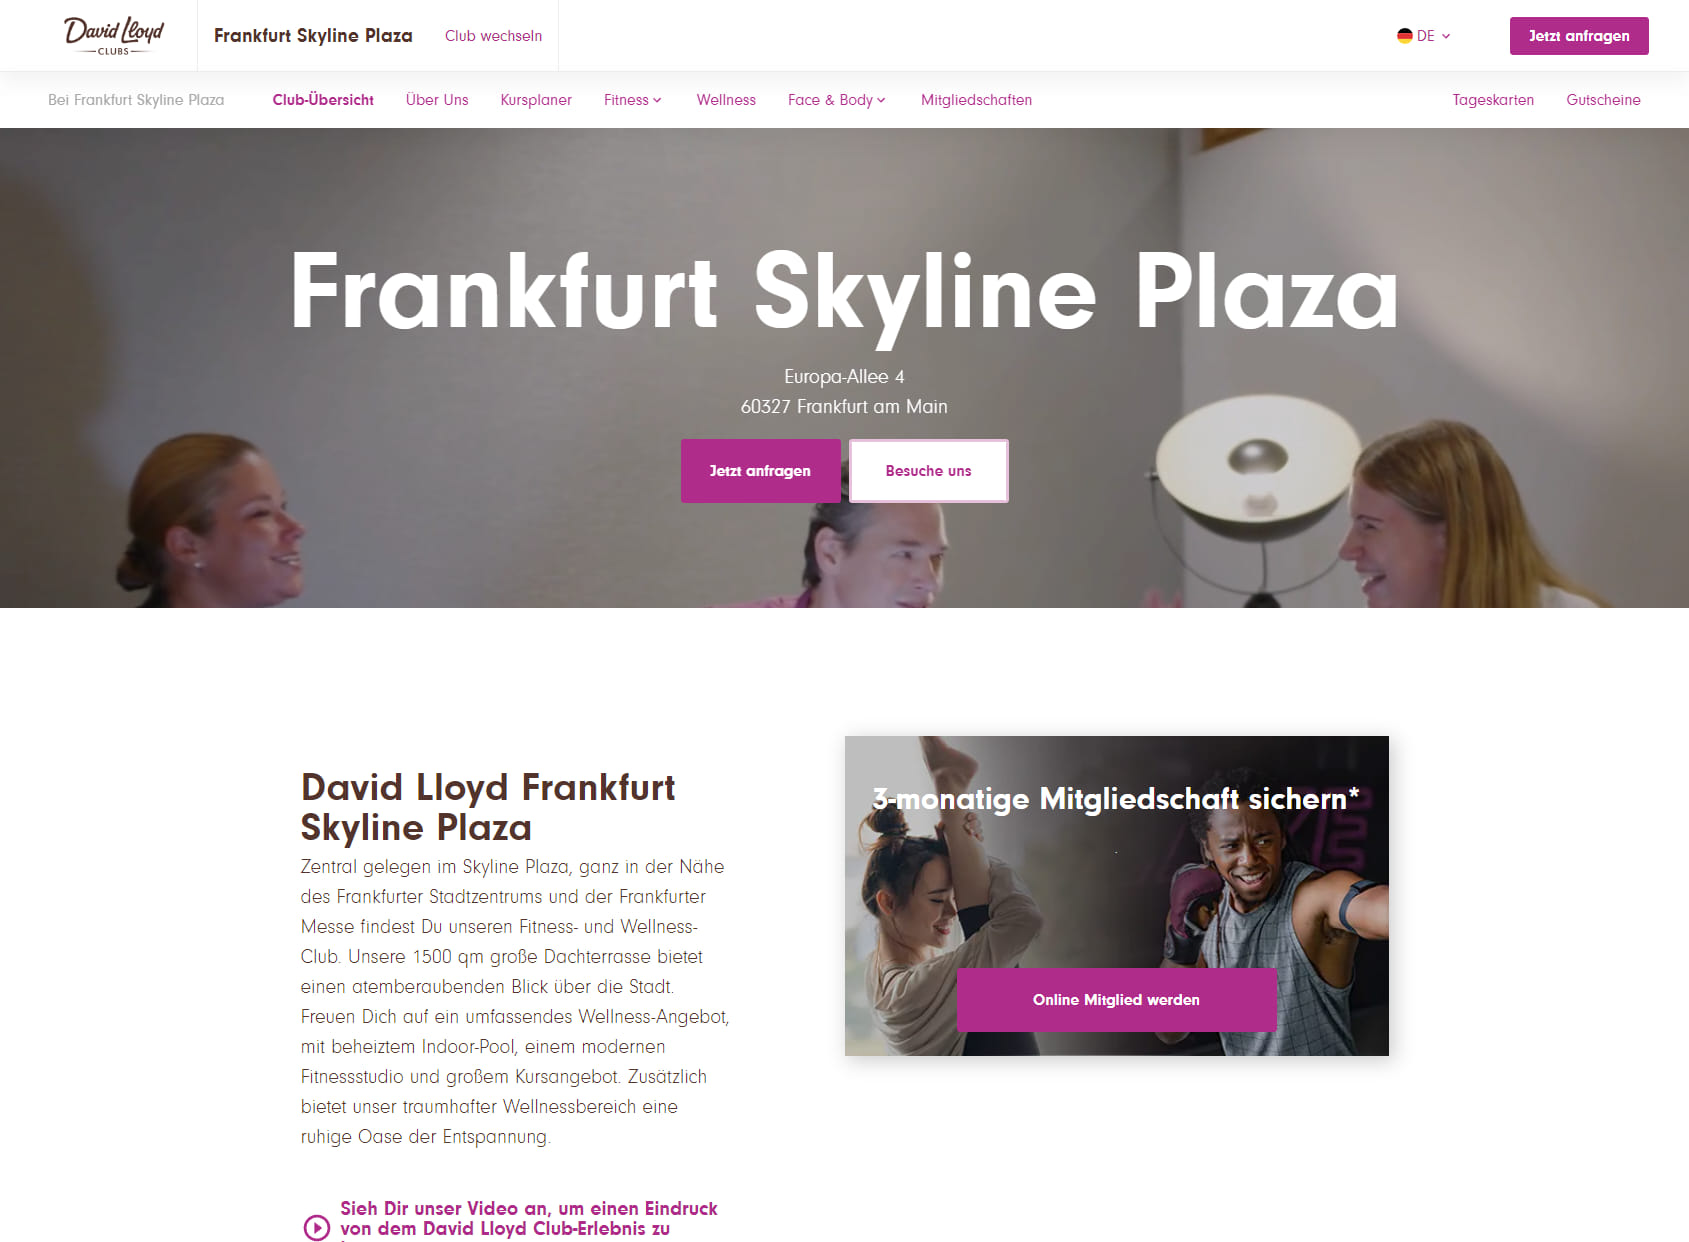 David Lloyd Frankfurt Skyline Plaza